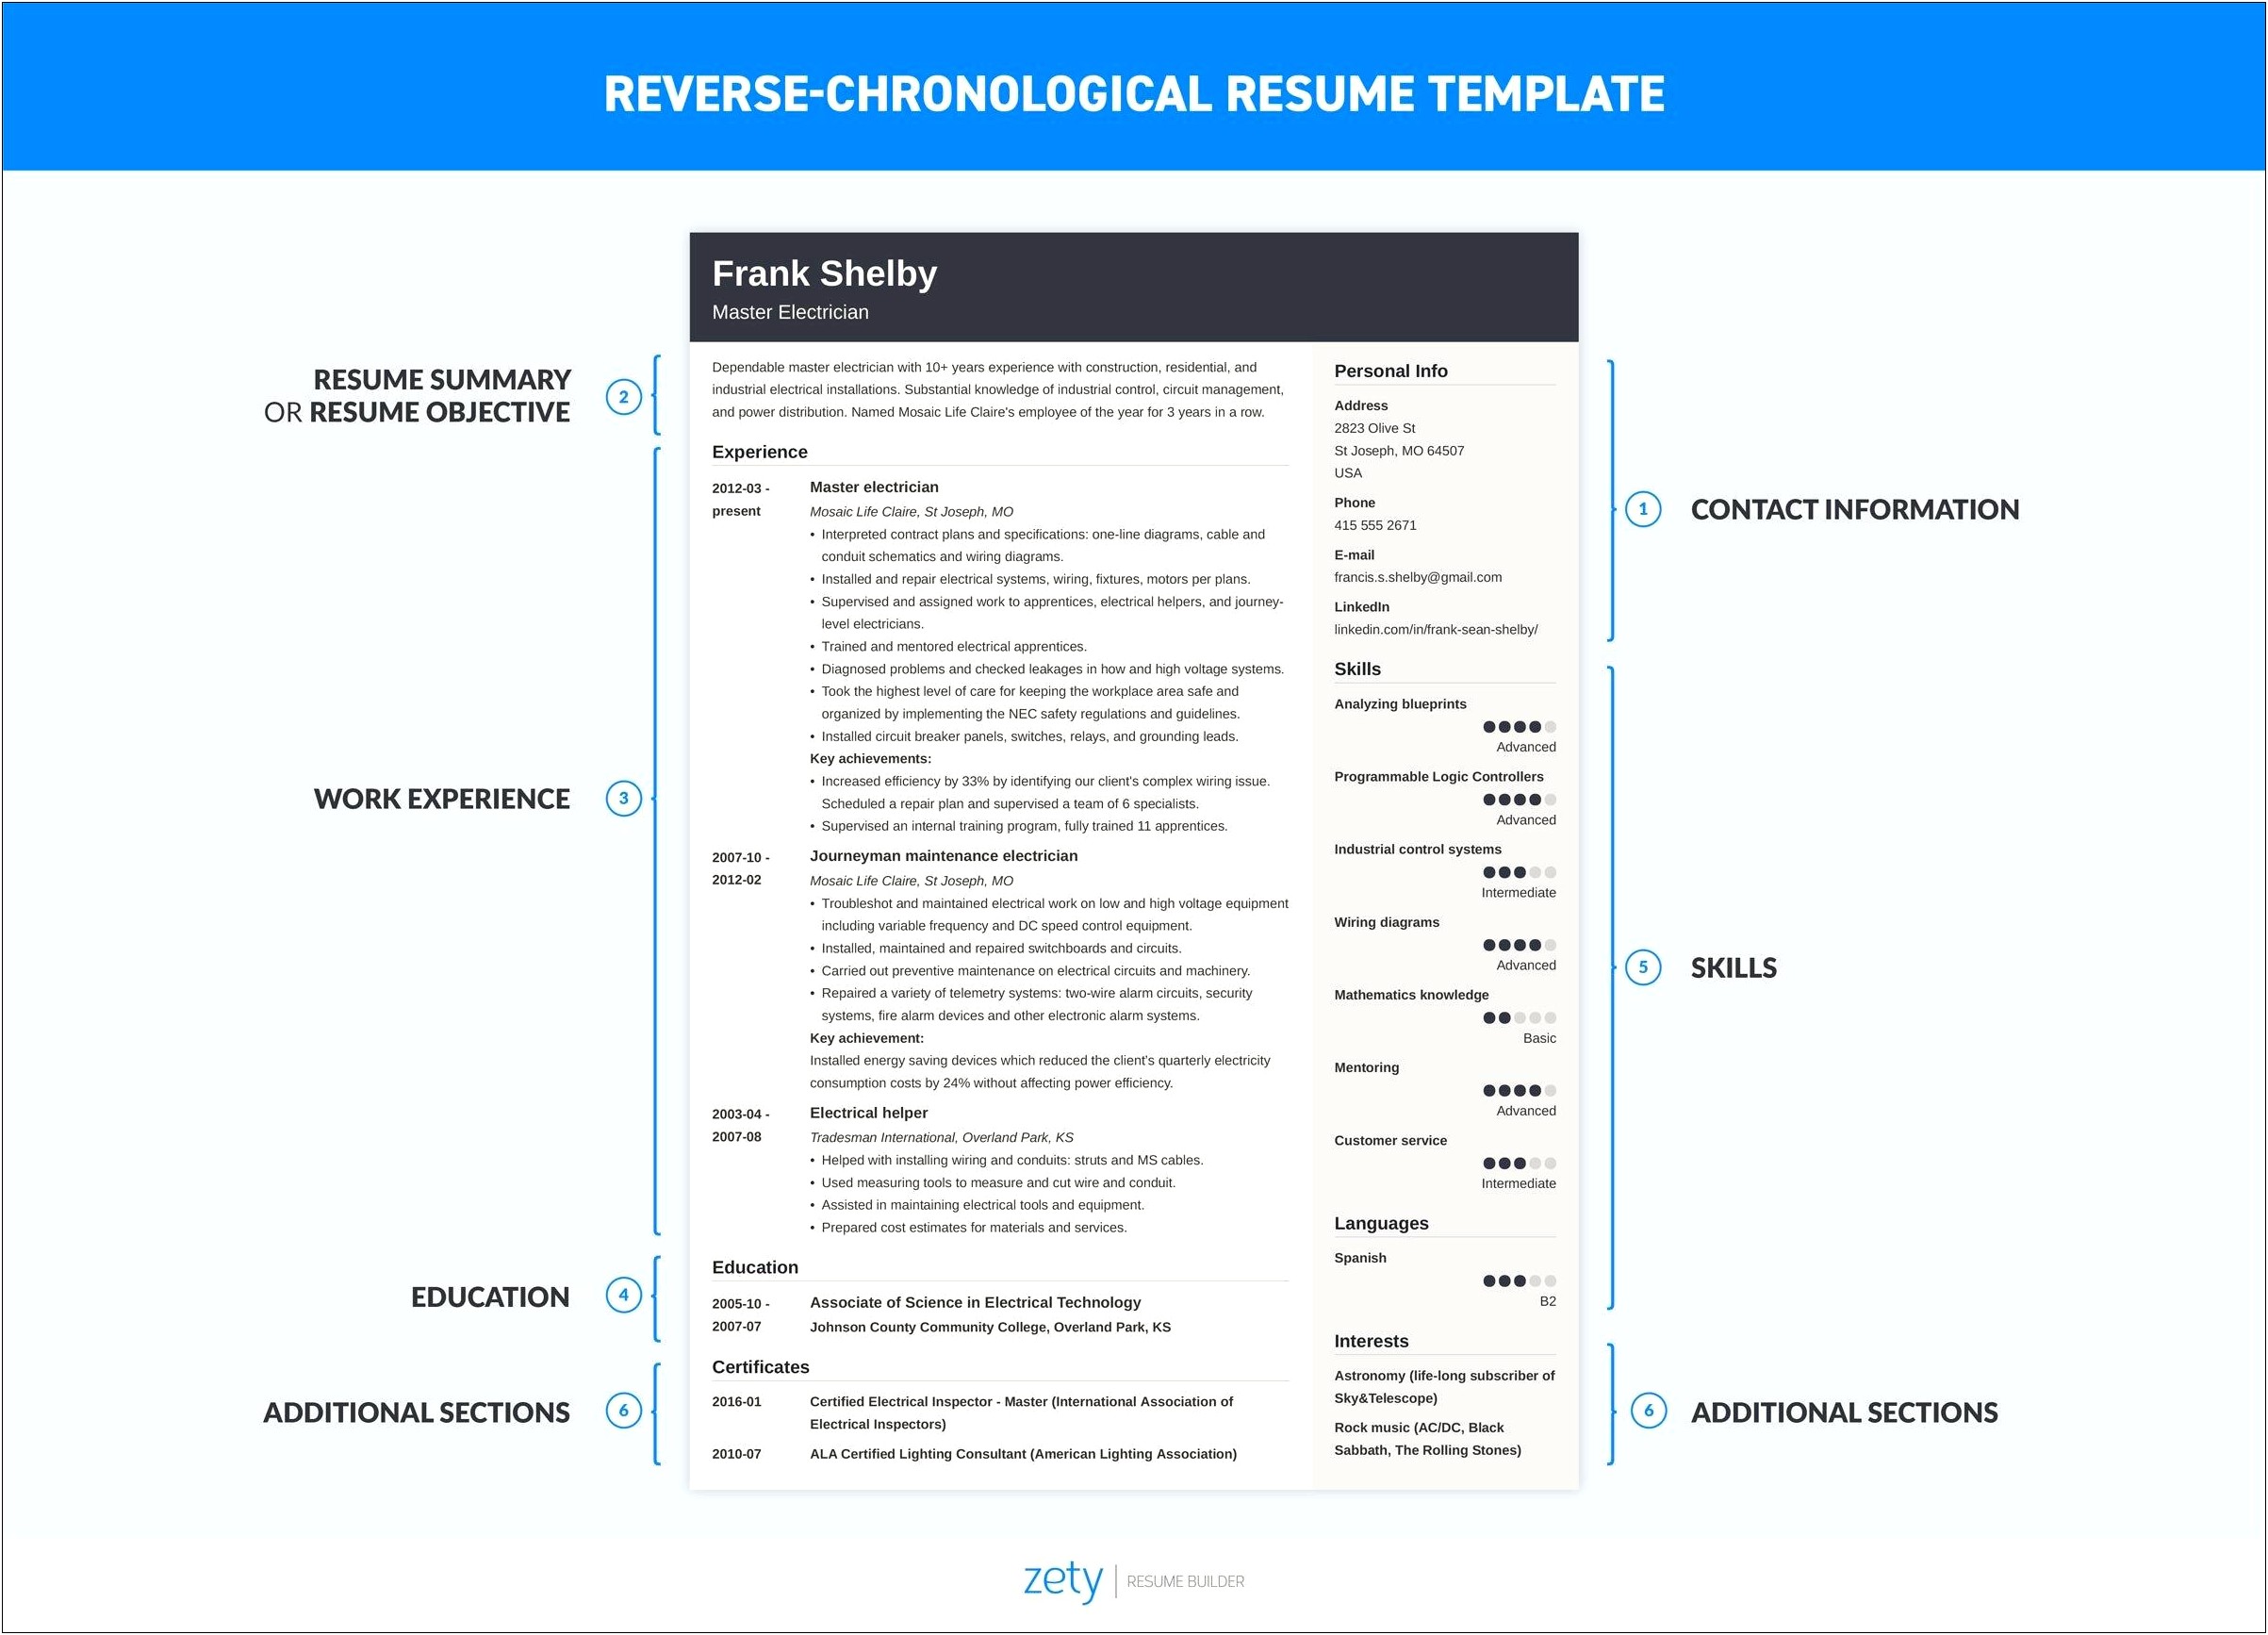 Finance Job Shadow Sample Resume